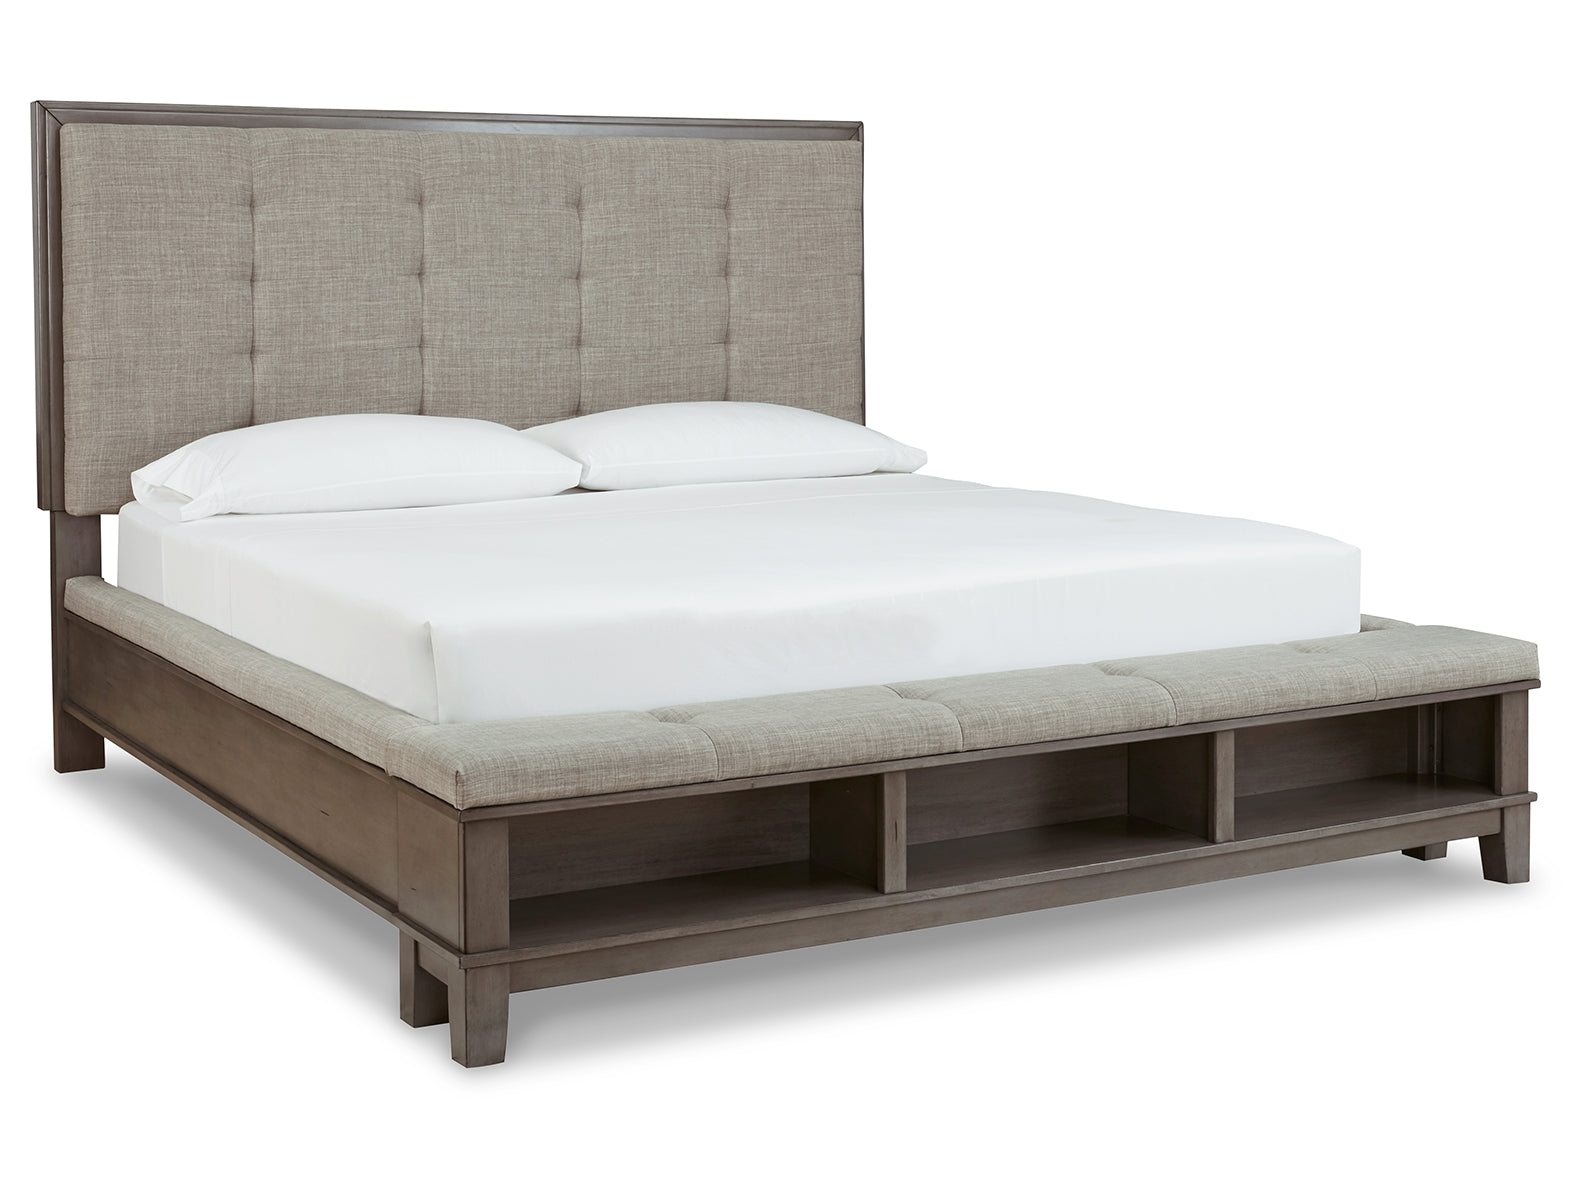 Hallanden Queen Panel Bed with Storage with Mirrored Dresser and 2 Nightstands